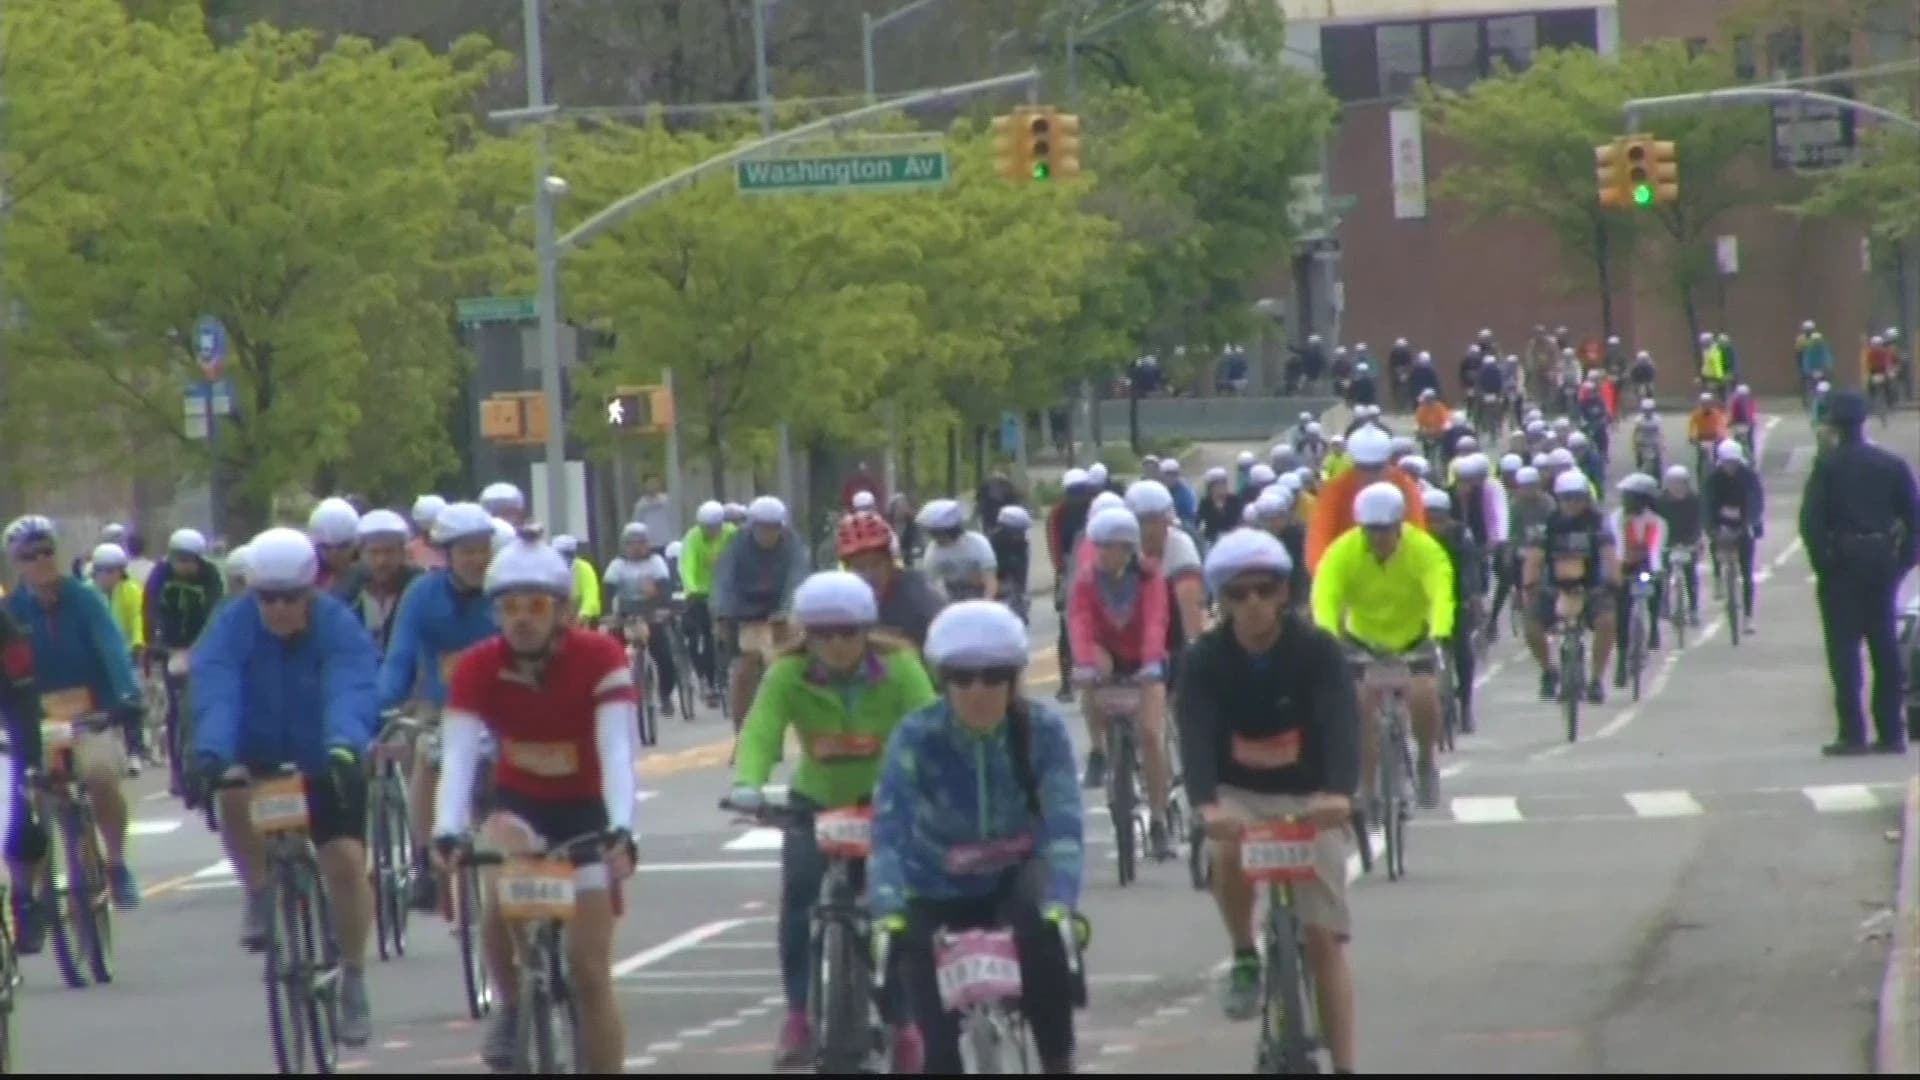 Five Boro Bike Tour held in New York City